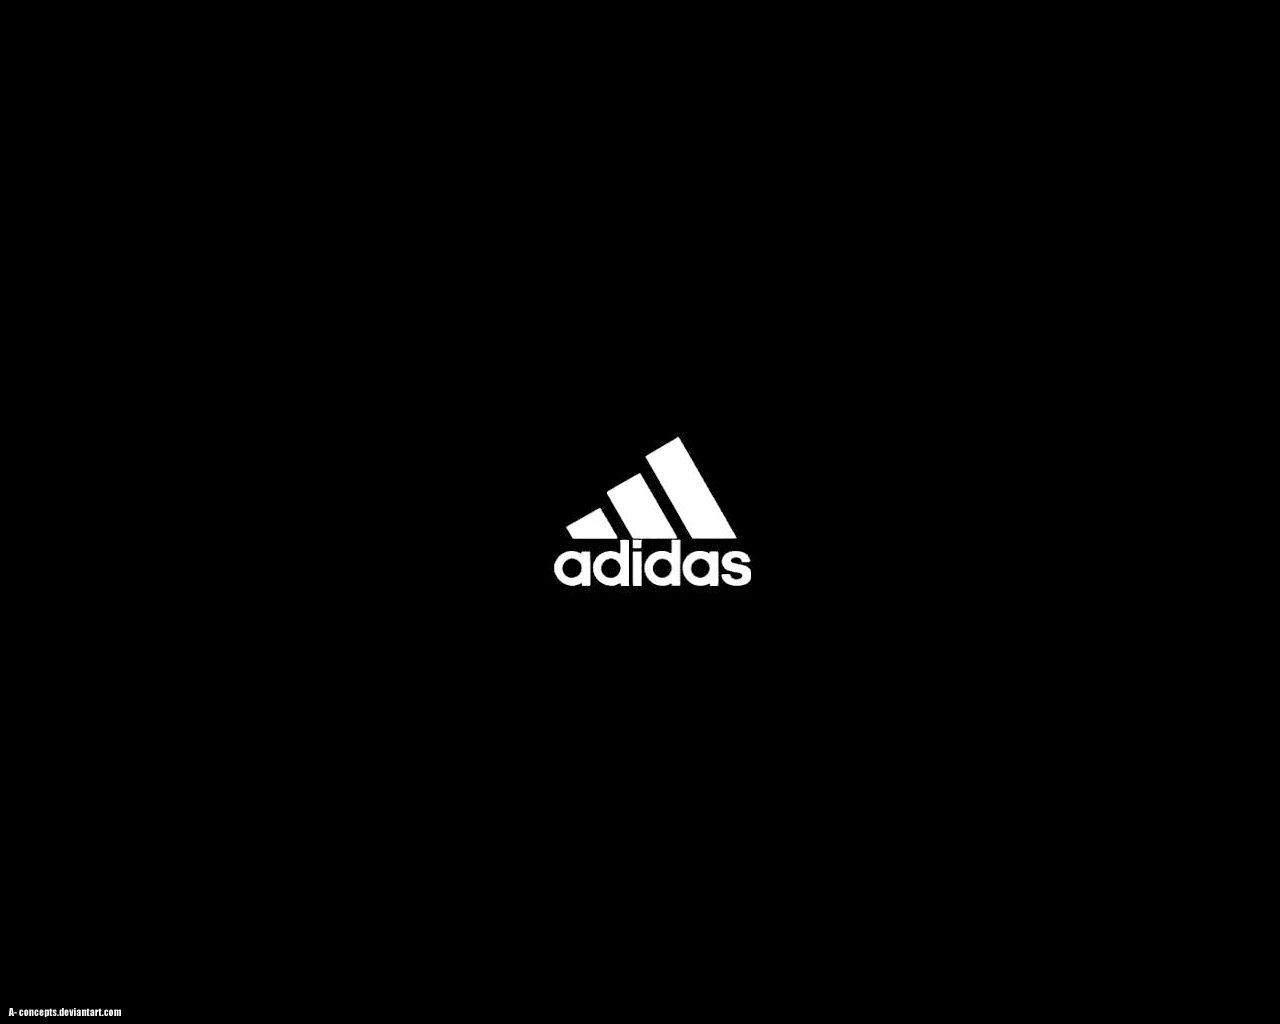 Free Adidas Logo Wallpapers - Wallpaper Cave